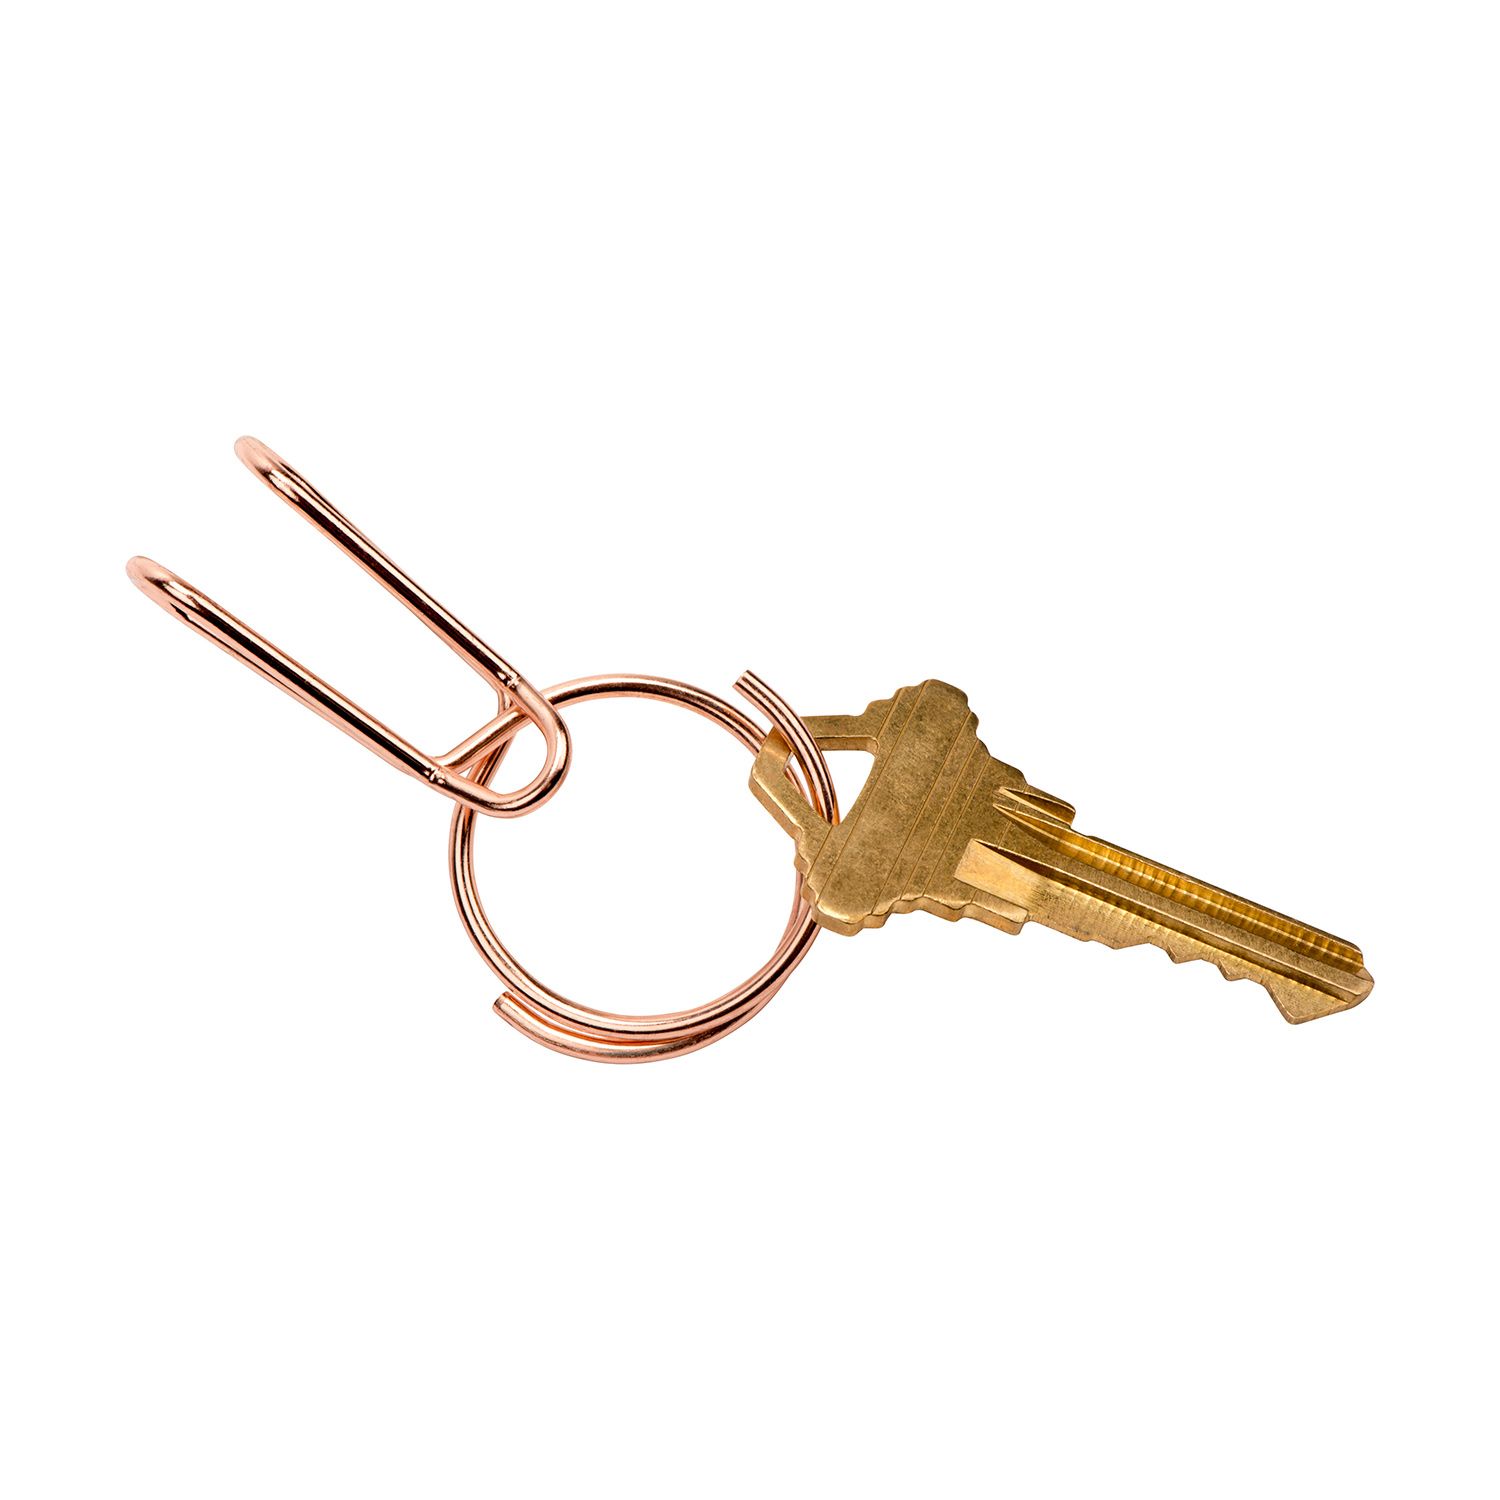 Nite Ize KSQR-40-R6 SqueezeRing Key Clip Copper 